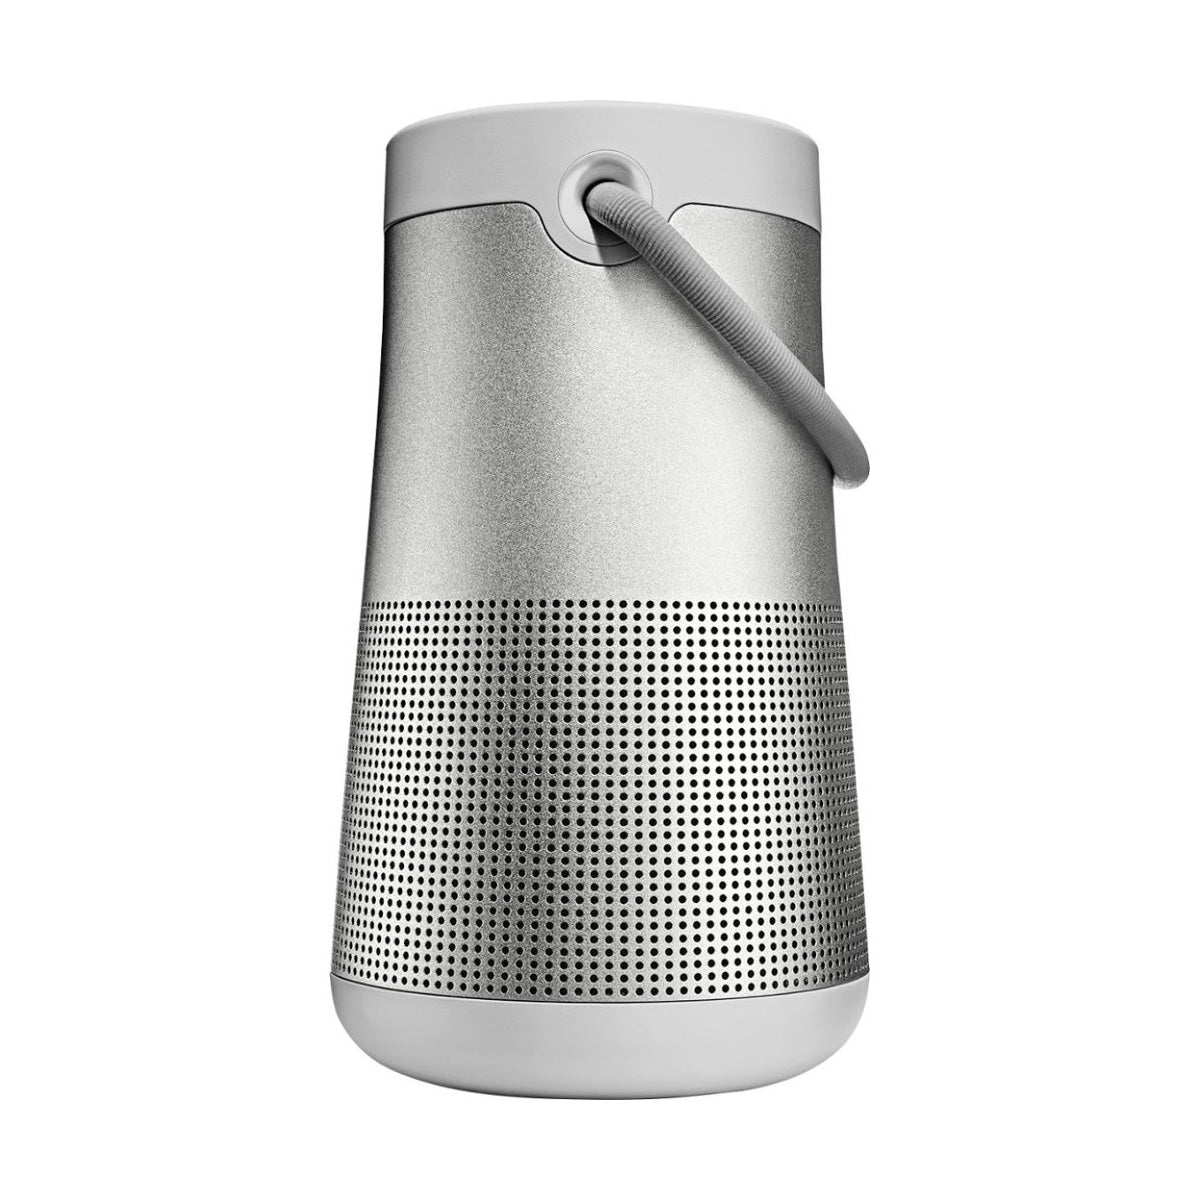 Ultra-Budget Portable Bluetooth Speaker